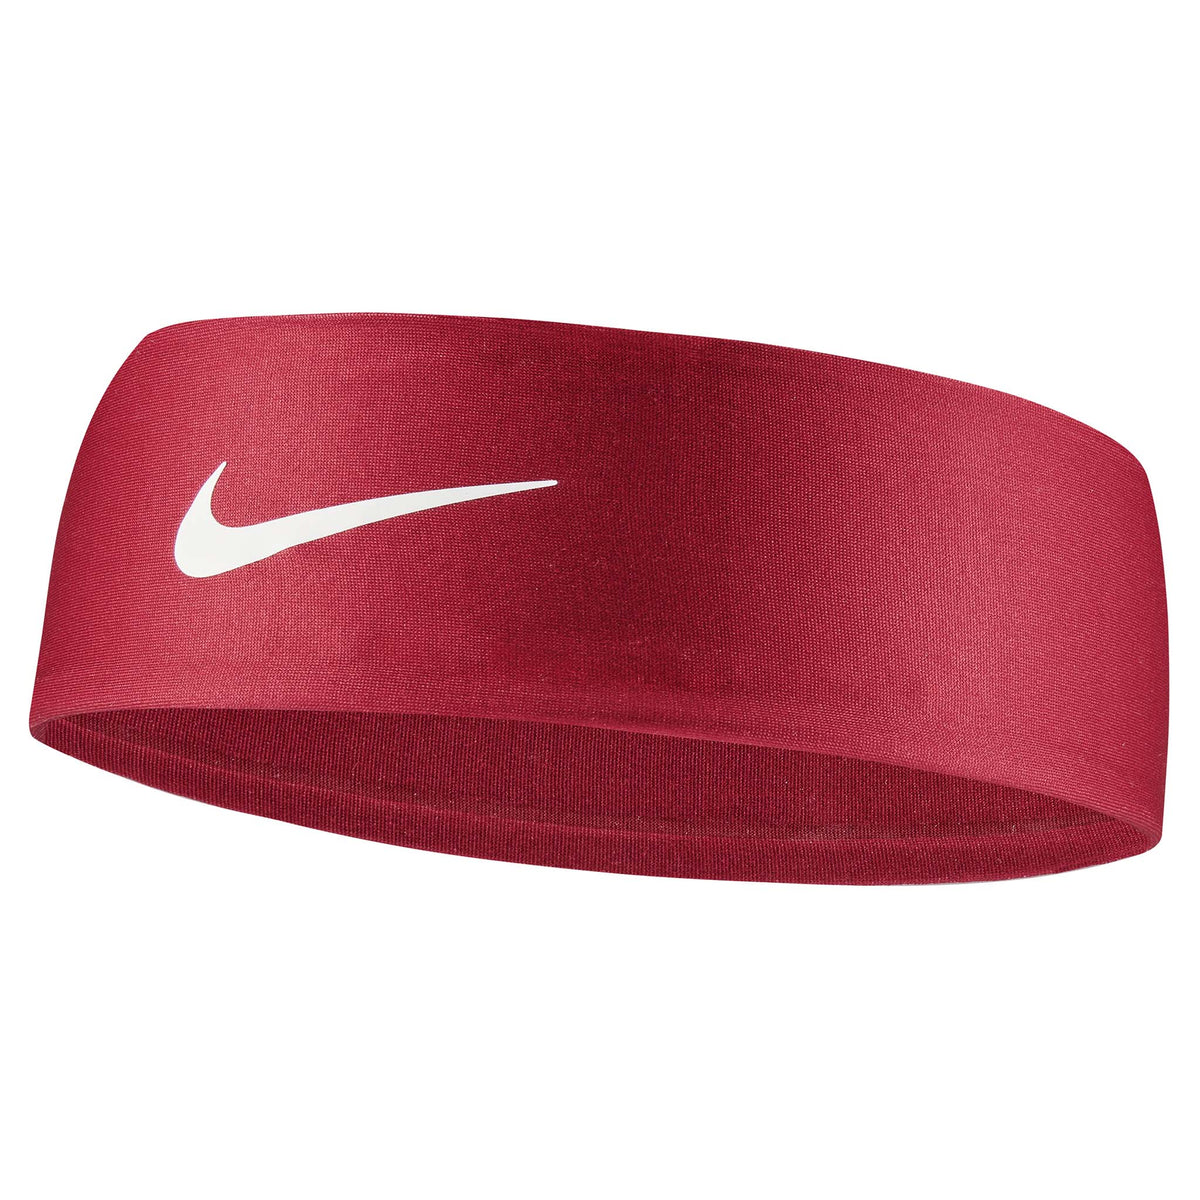 Nike Fury Headband 3.0 bandeaux de tete gym red white